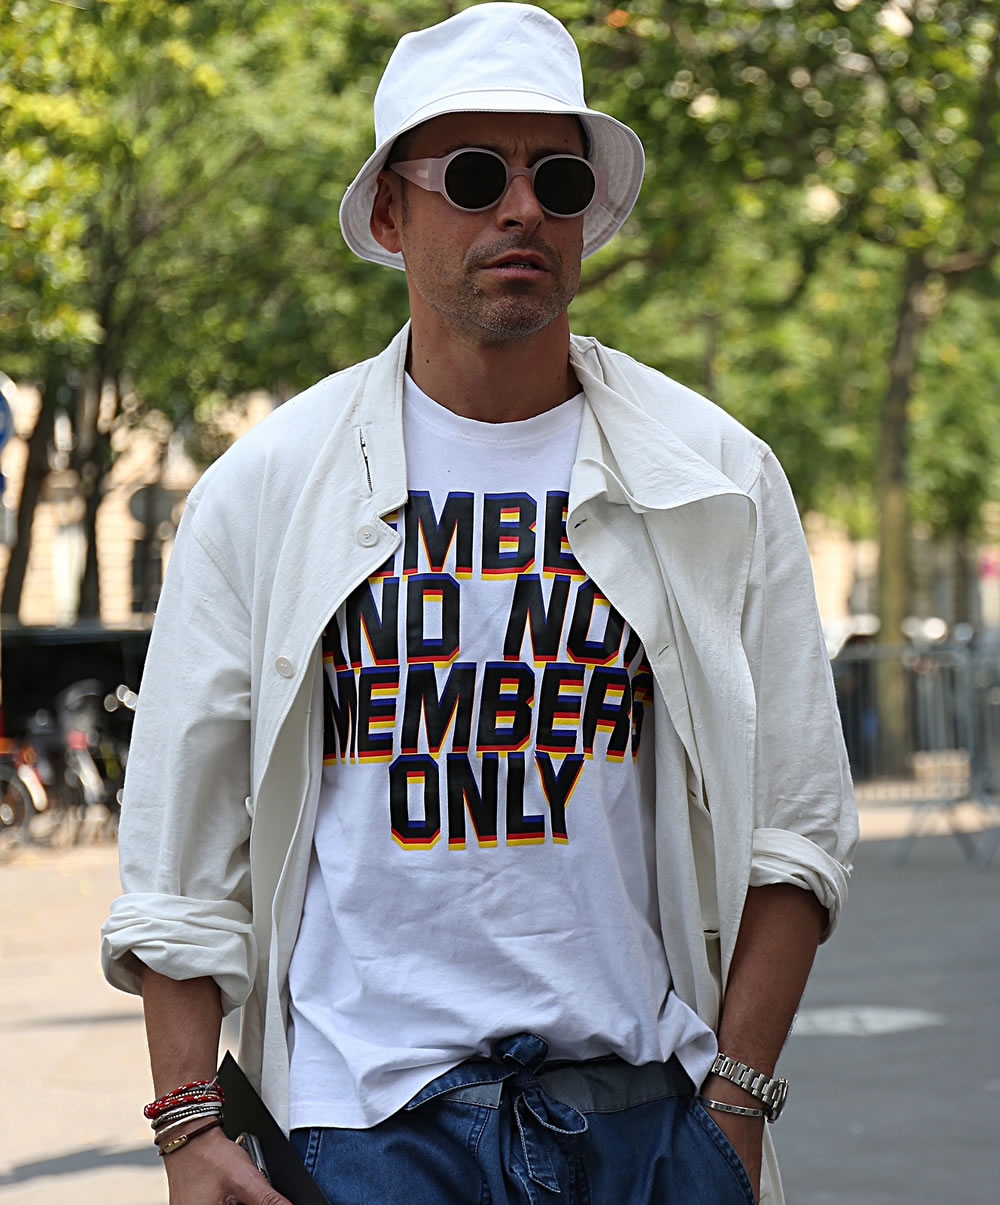 Alex Badia on the street during the Paris Fashion Week